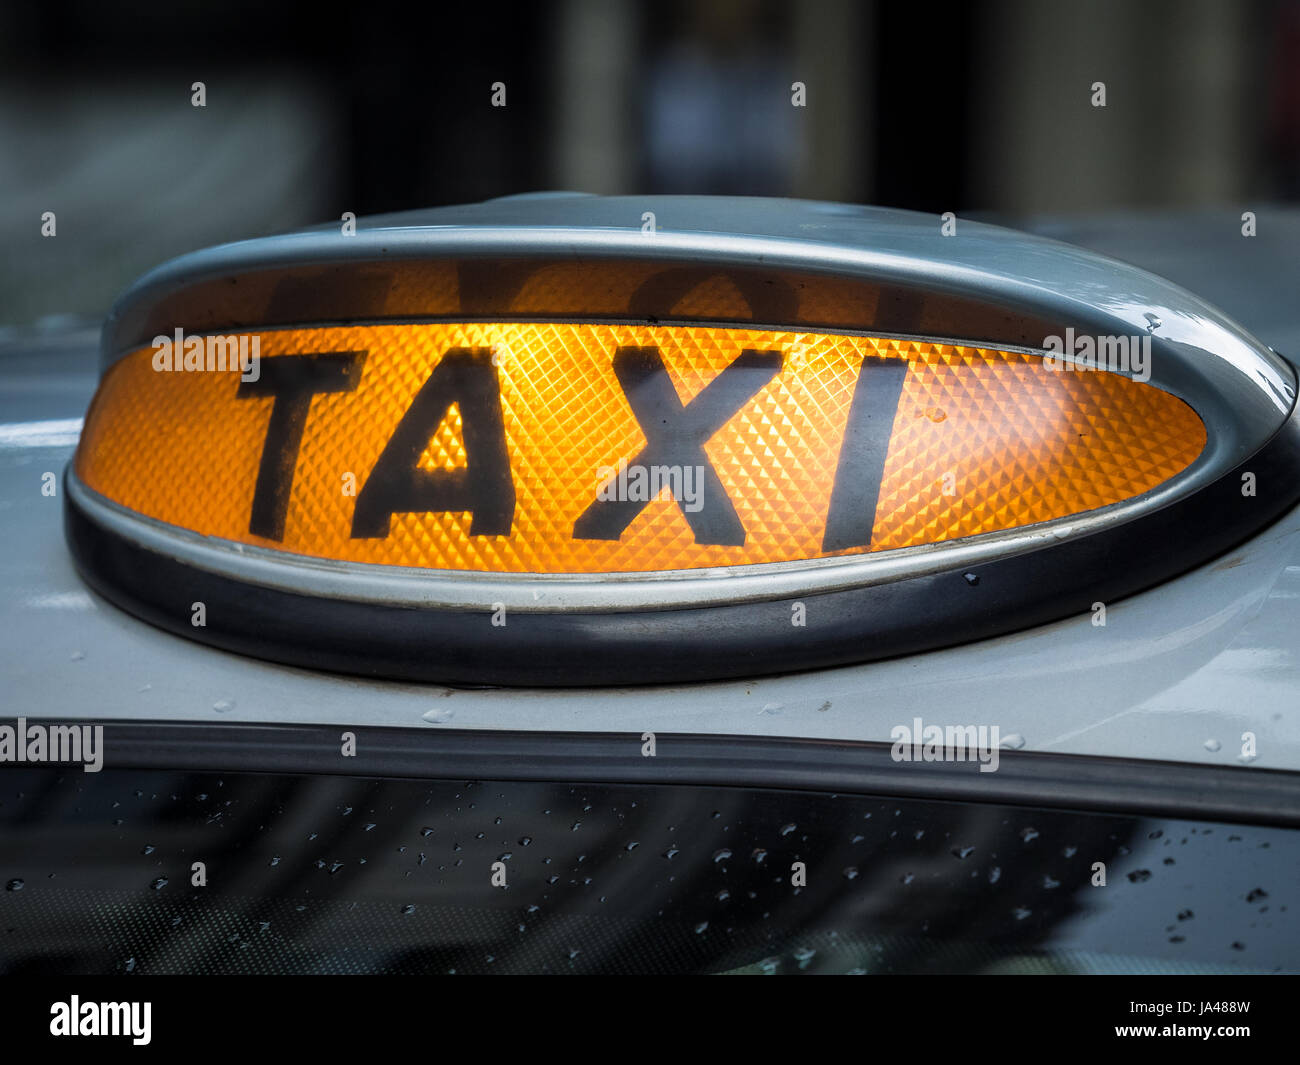 London Taxi Black Cab - Dach Zeichen auf ein London Taxi (Taxi) Stockfoto